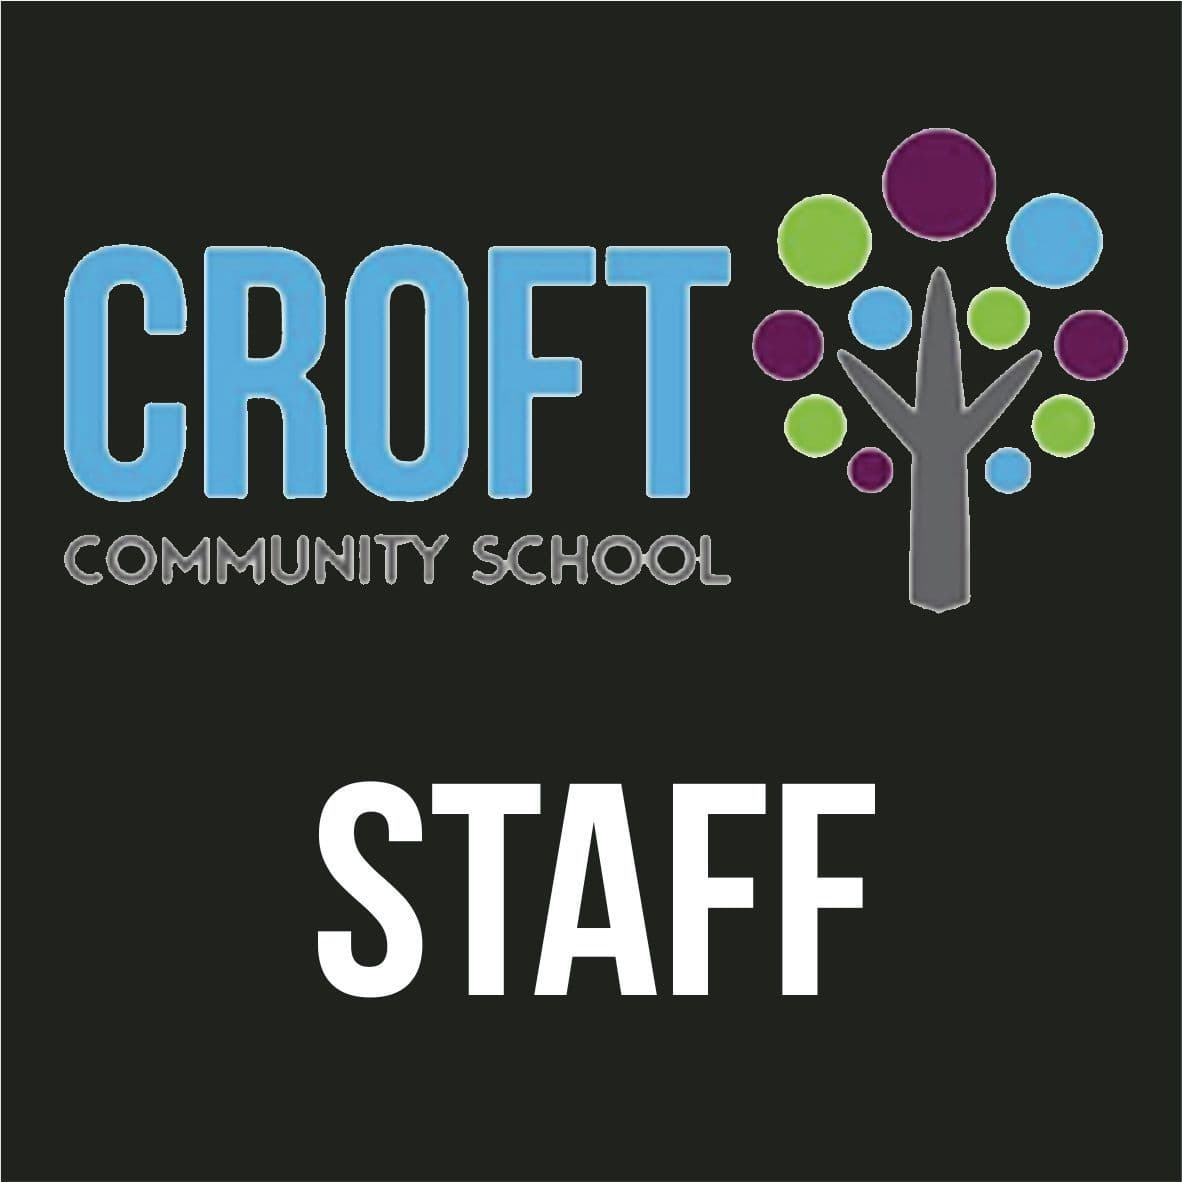 Croft Community School Staff